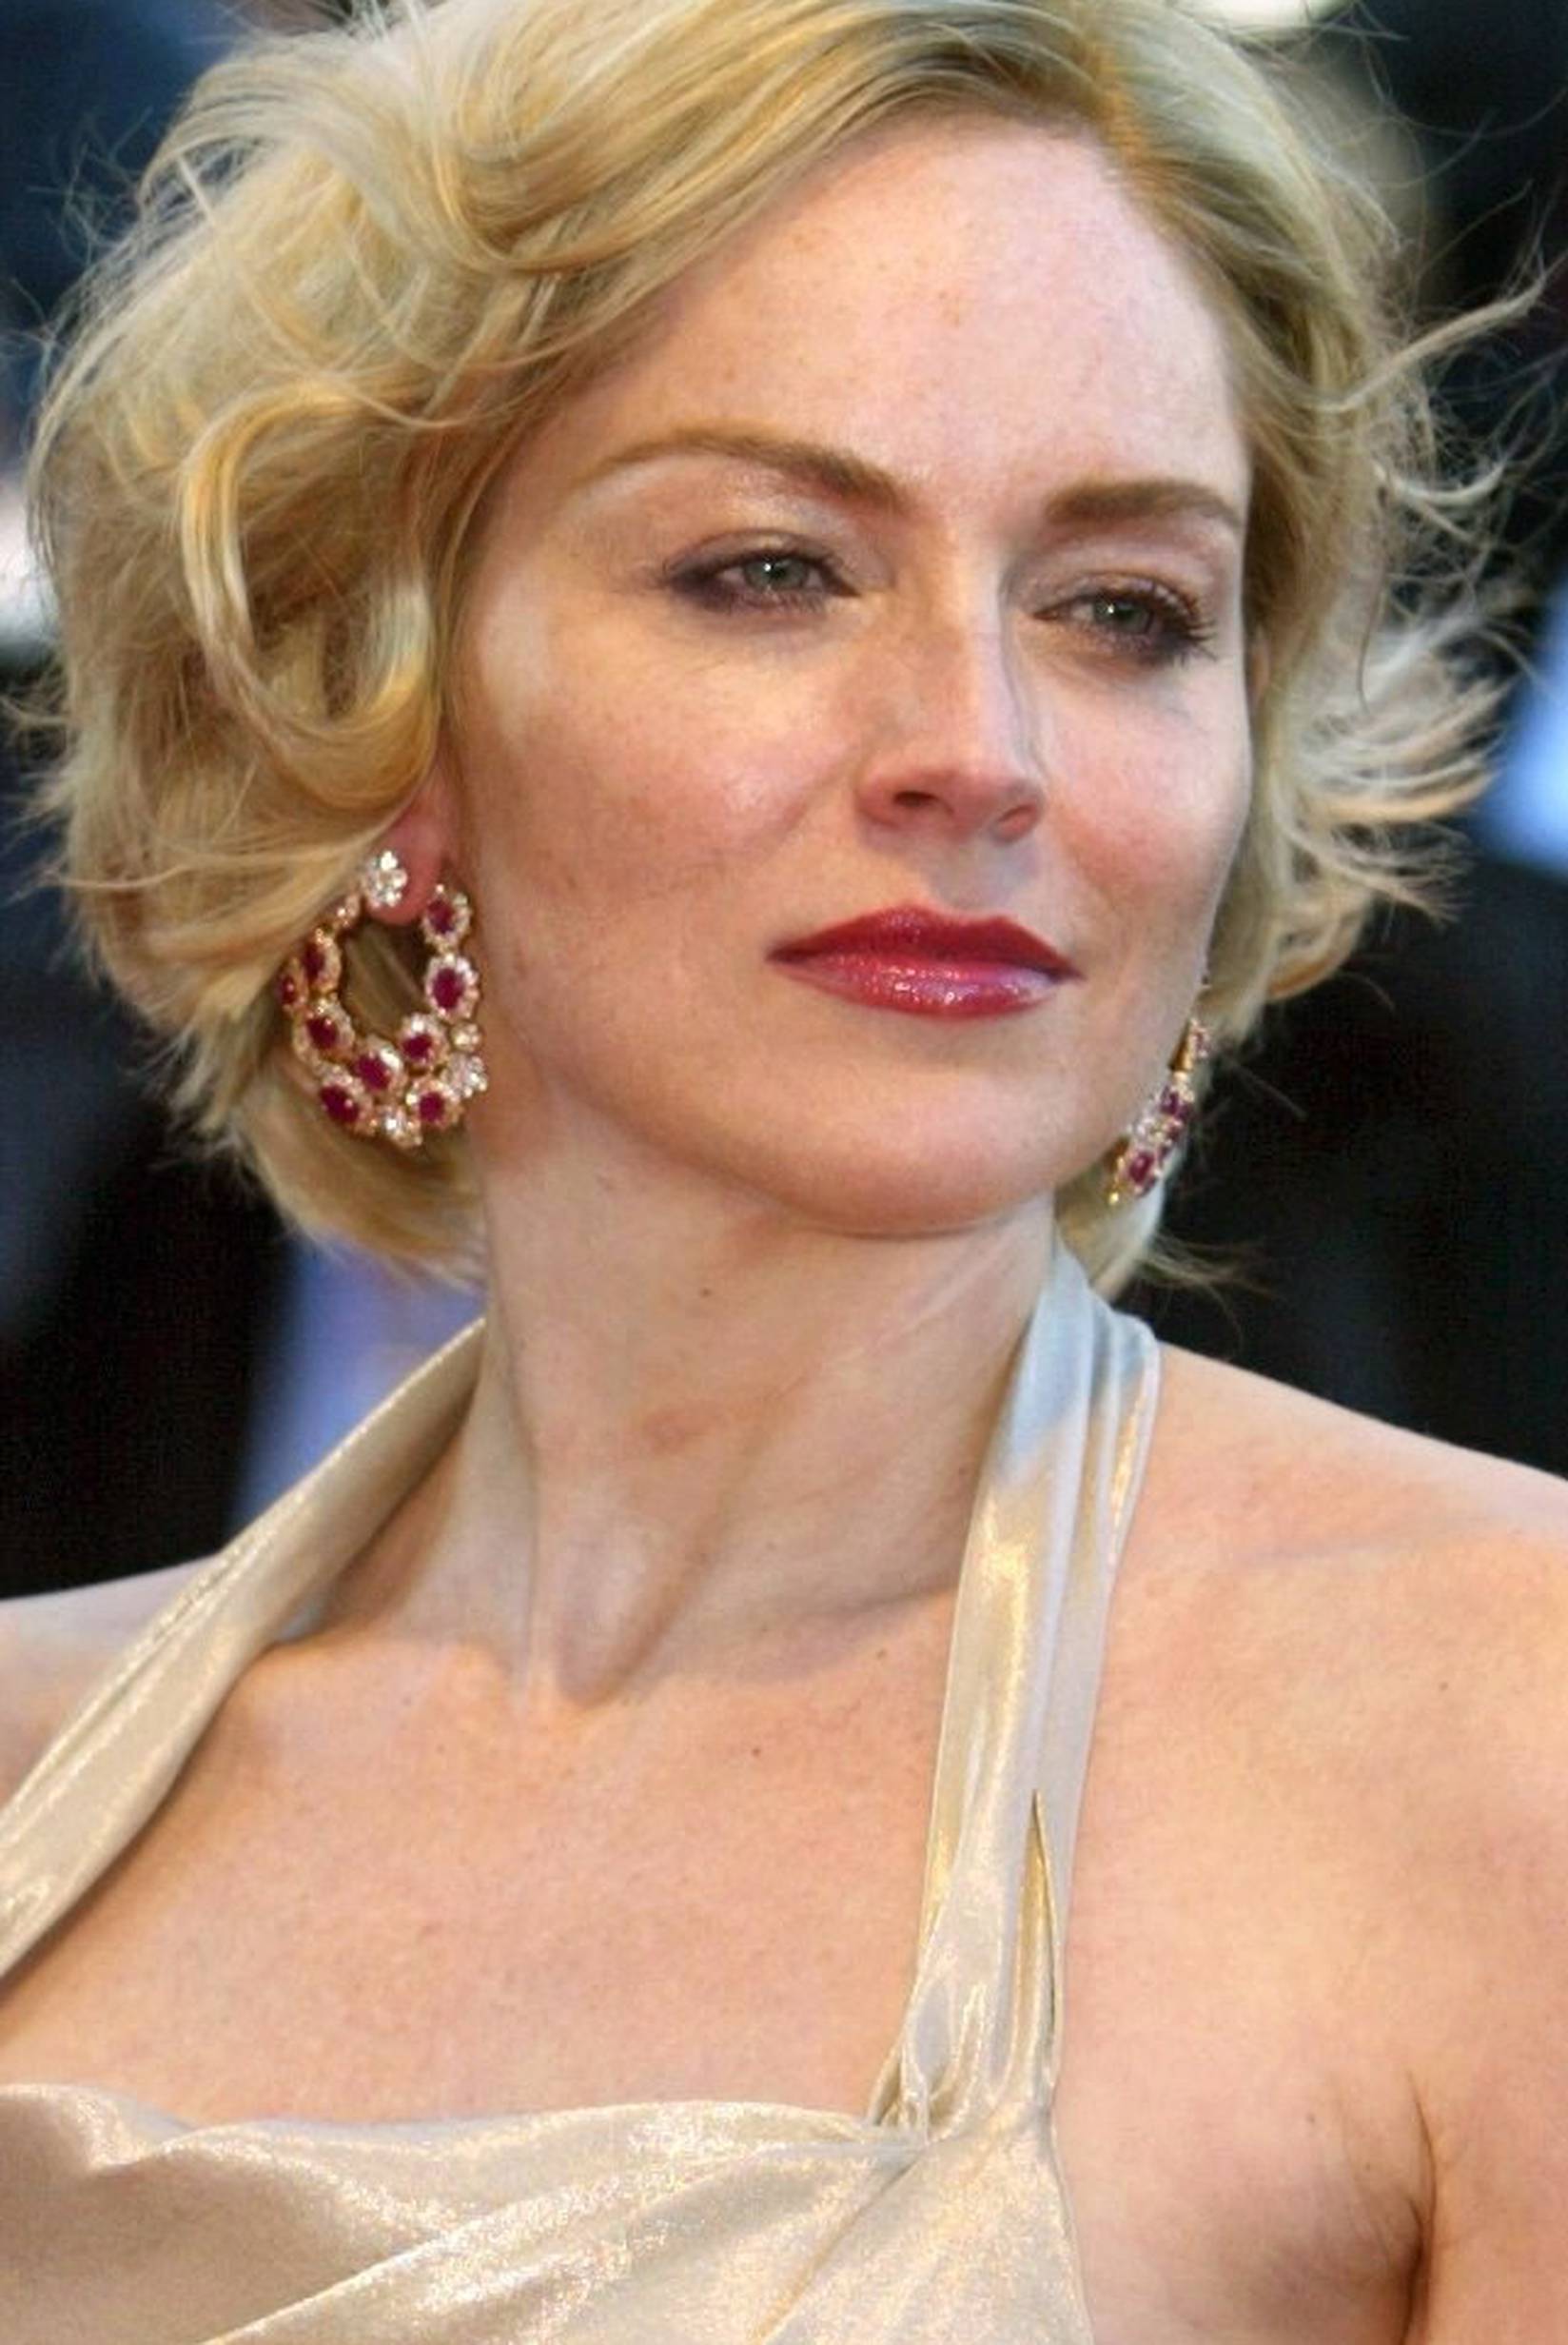 55th Cannes Film Festival - Sharon Stone